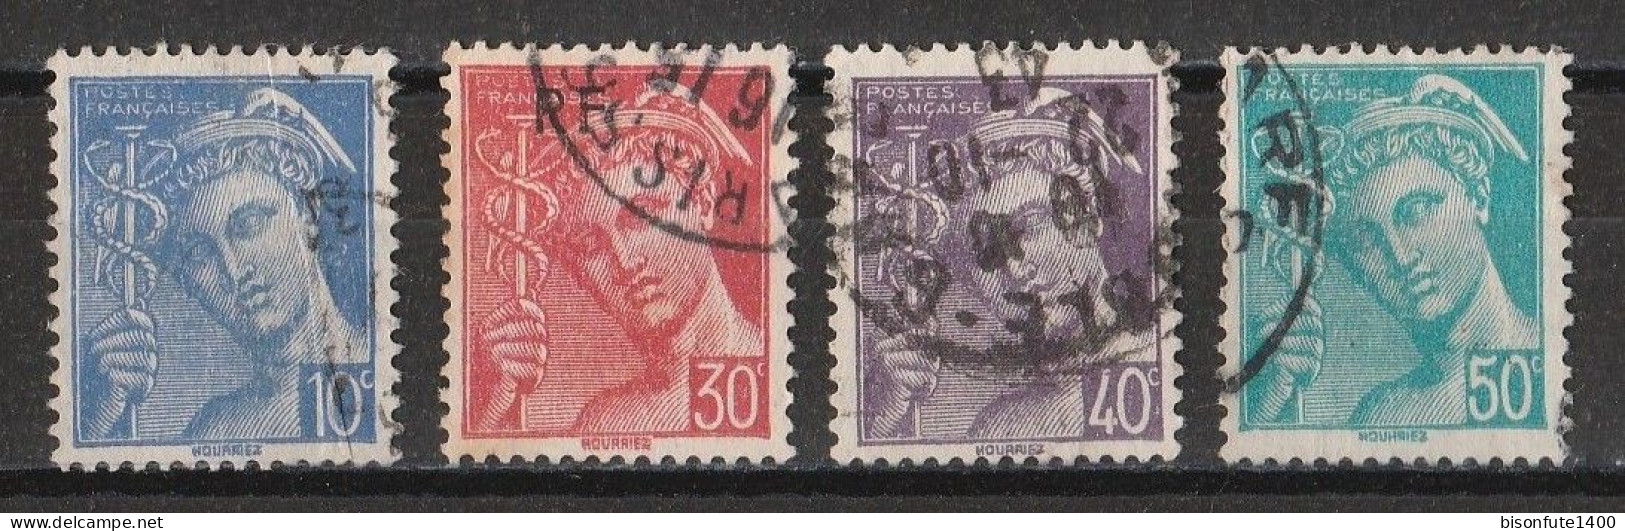 France 1942 : Timbres Yvert & Tellier N° 546 - 547 - 548 - 549 Et 552 Avec Oblitérations Rondes. - Used Stamps